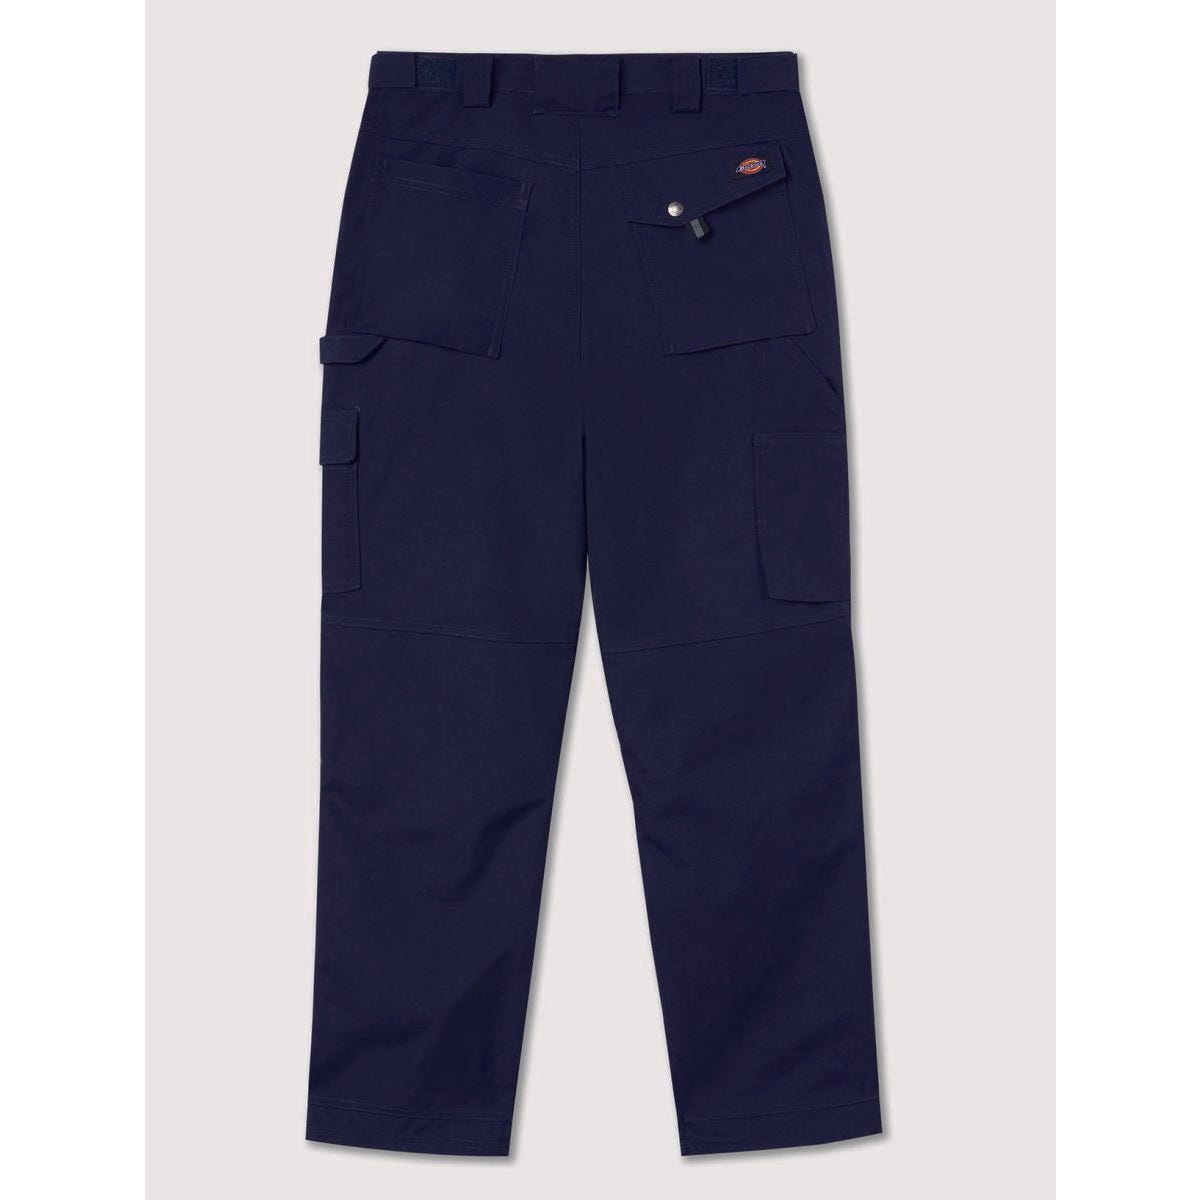 Pantalon Eisenhower multi-poches Noir - Dickies - Taille 42 7